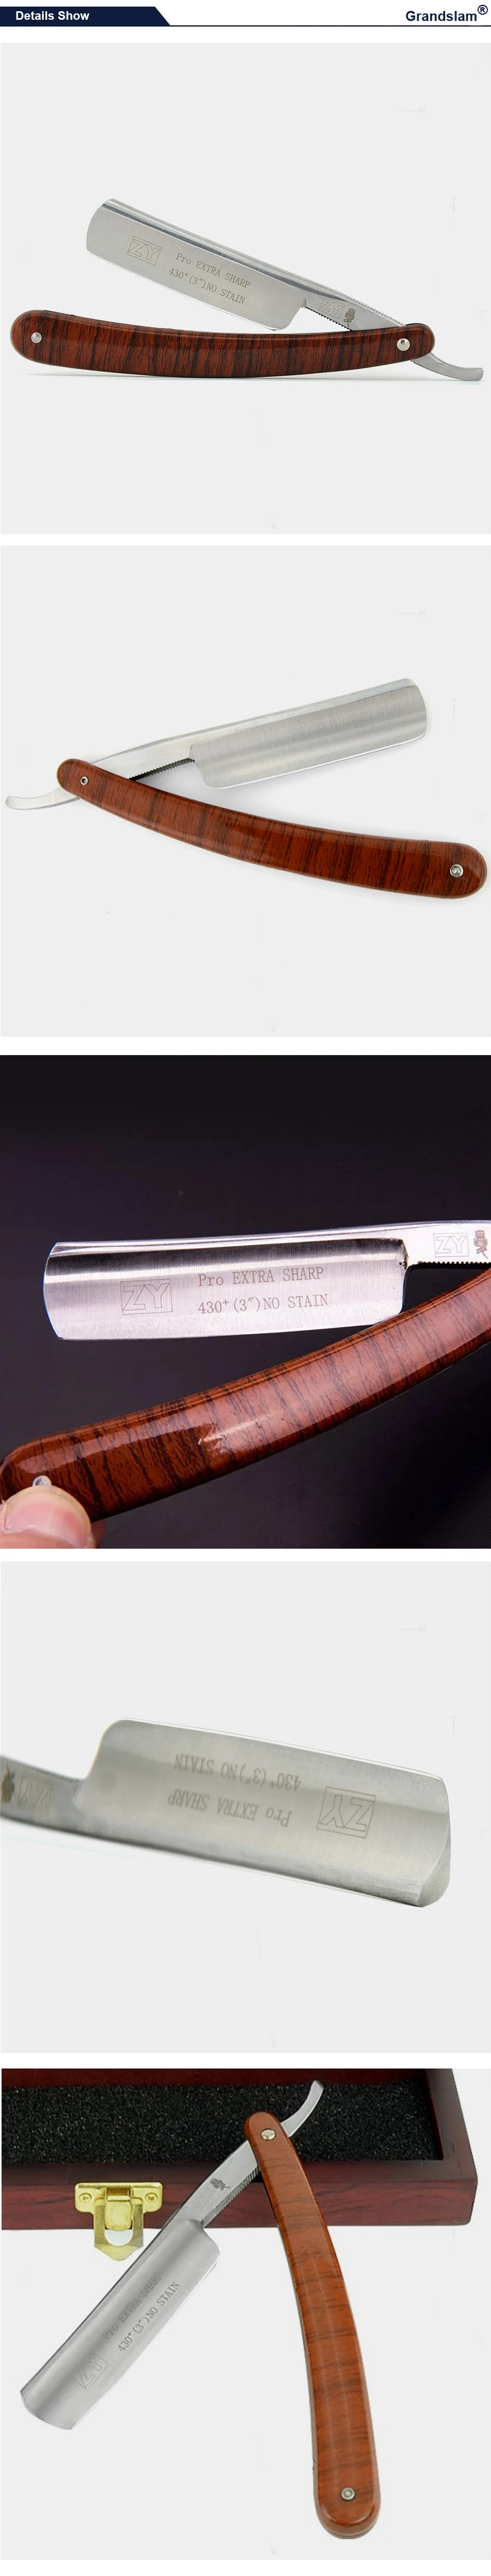 ZY 430 бритва для бритья, прямая Бритва для мужчин, Парикмахерская, режущая горловина, складное лезвие, нож для бритья